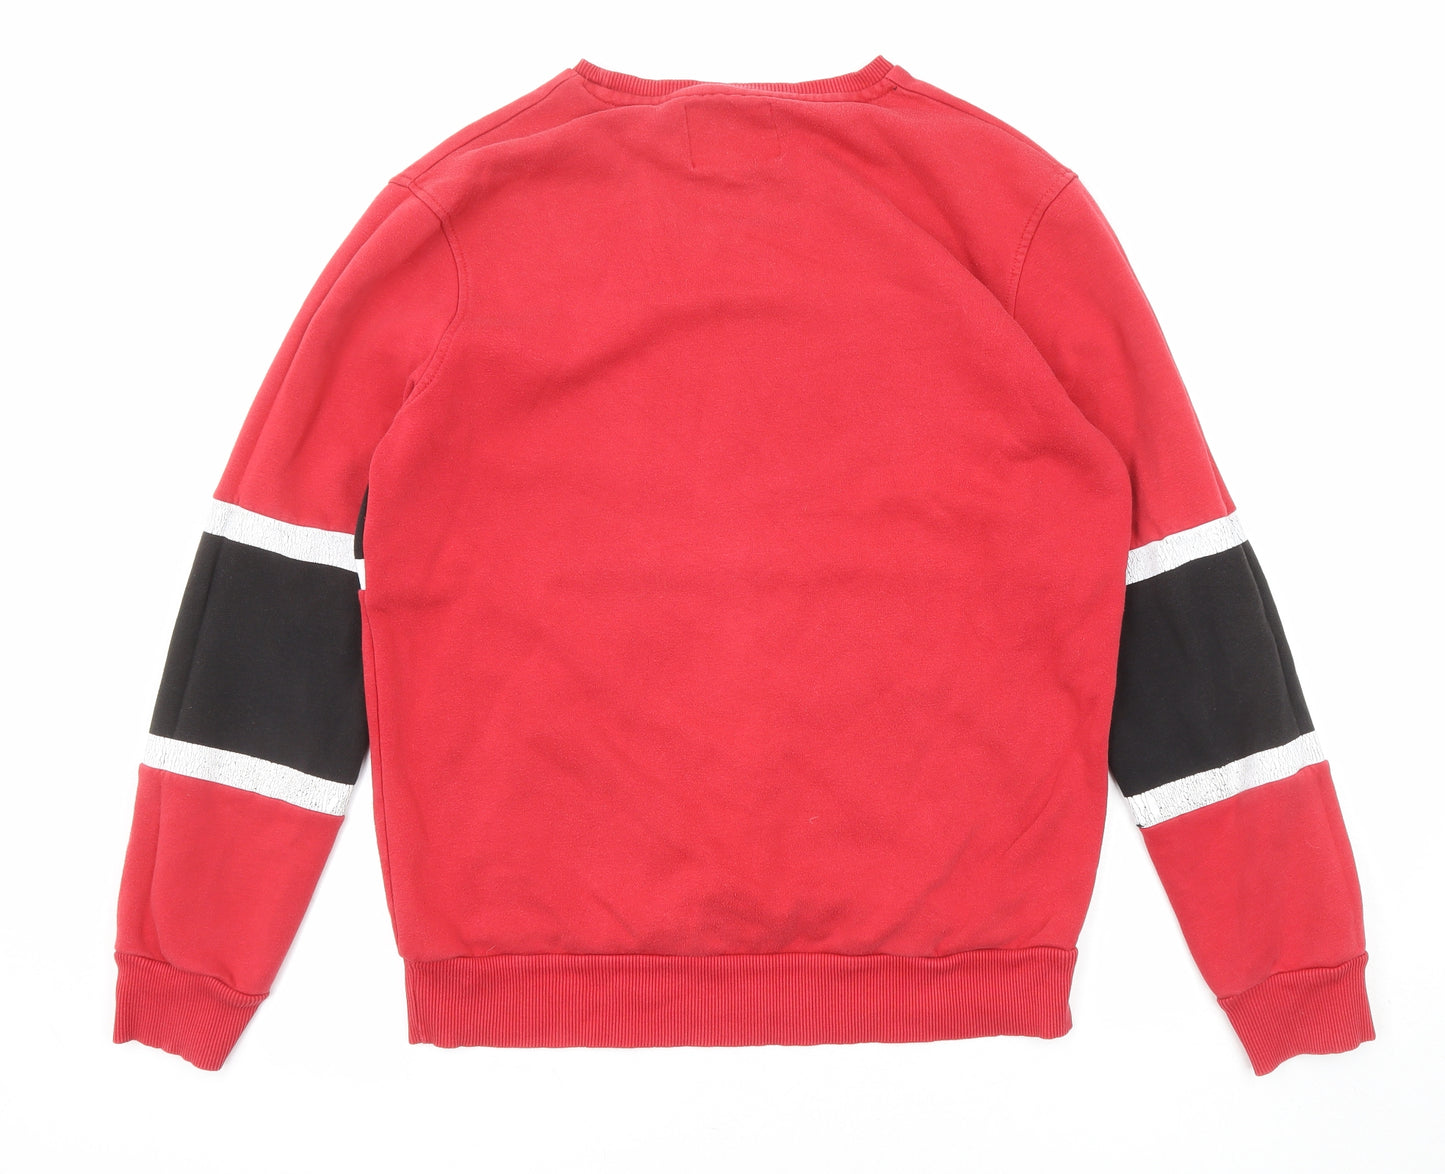 Coca-Cola Mens Red Cotton Pullover Sweatshirt Size L